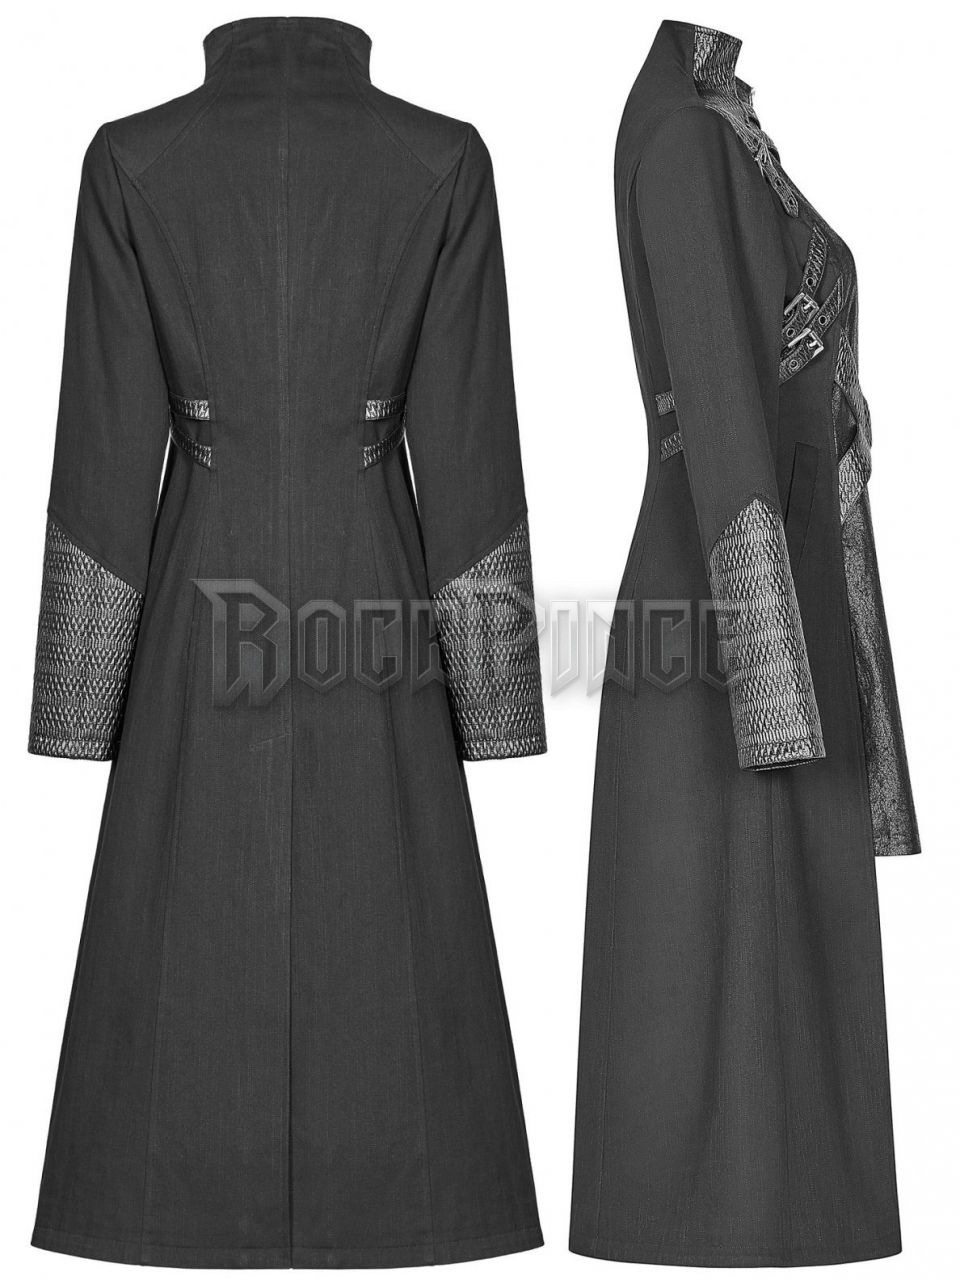 VULTURIA - női kabát WY-974